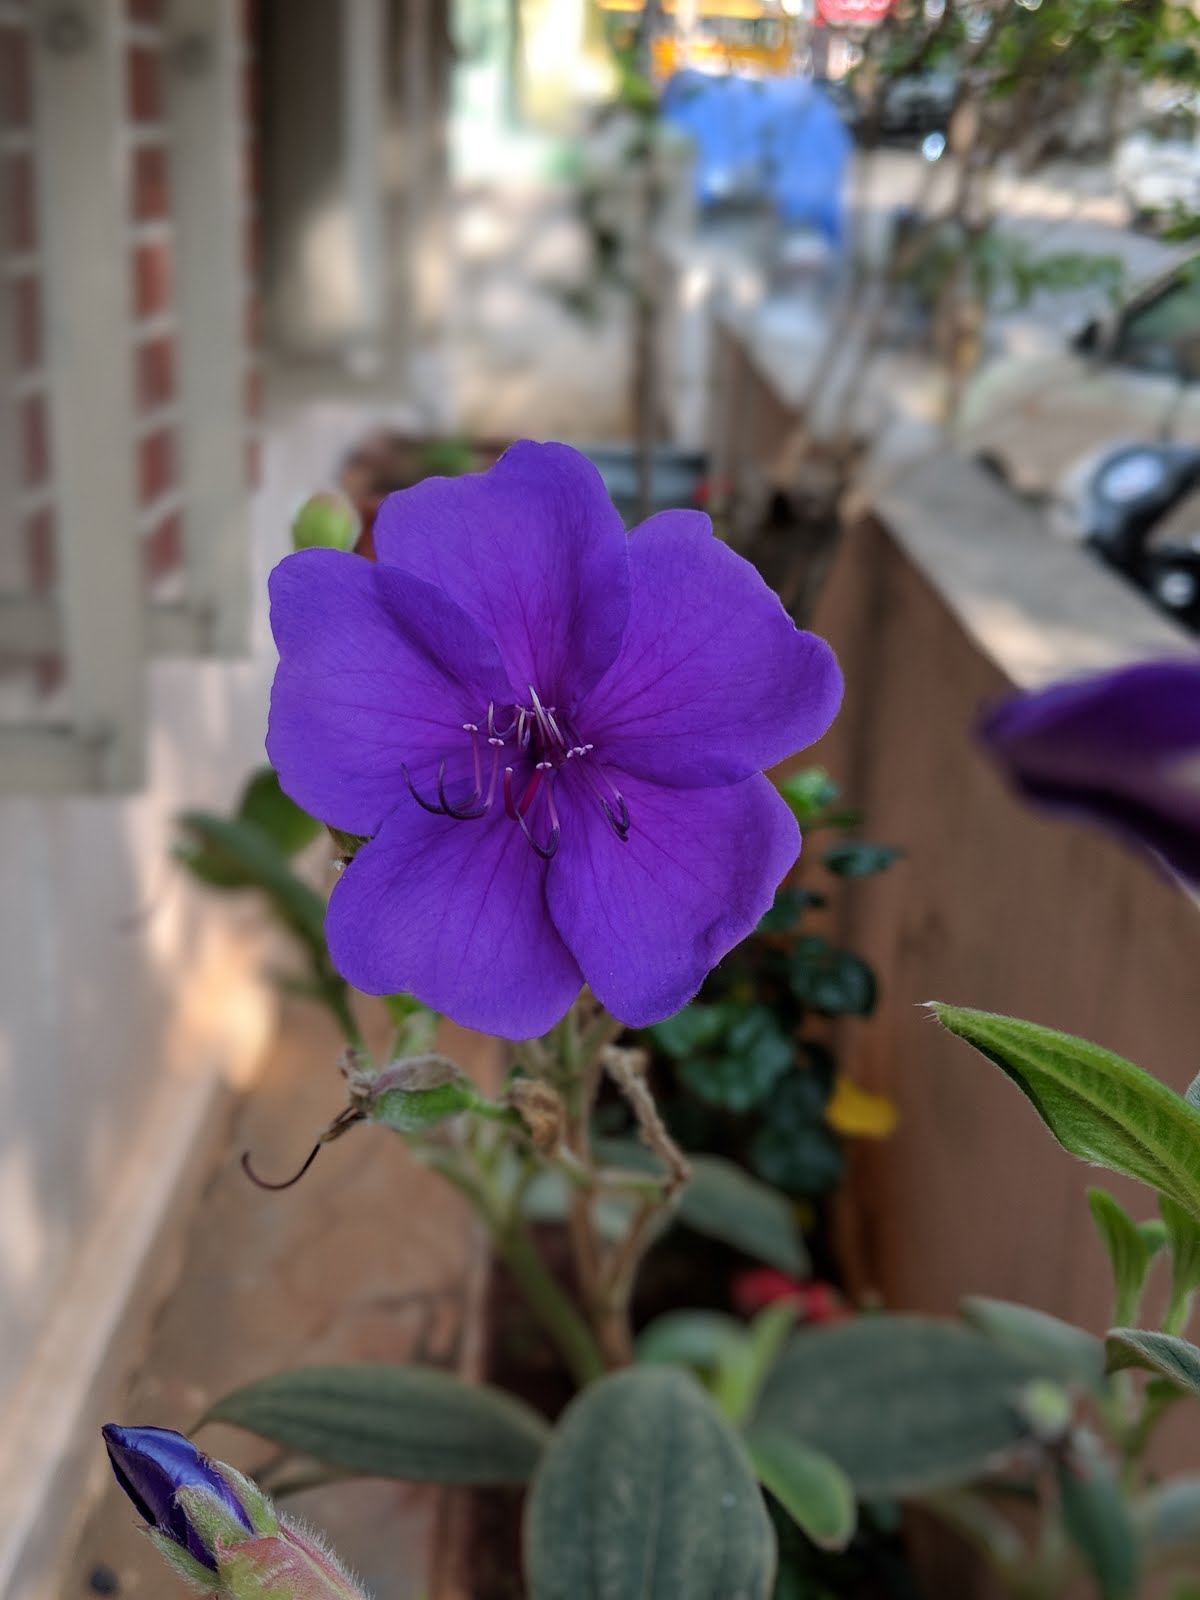 Purple flower blooming in my home garden